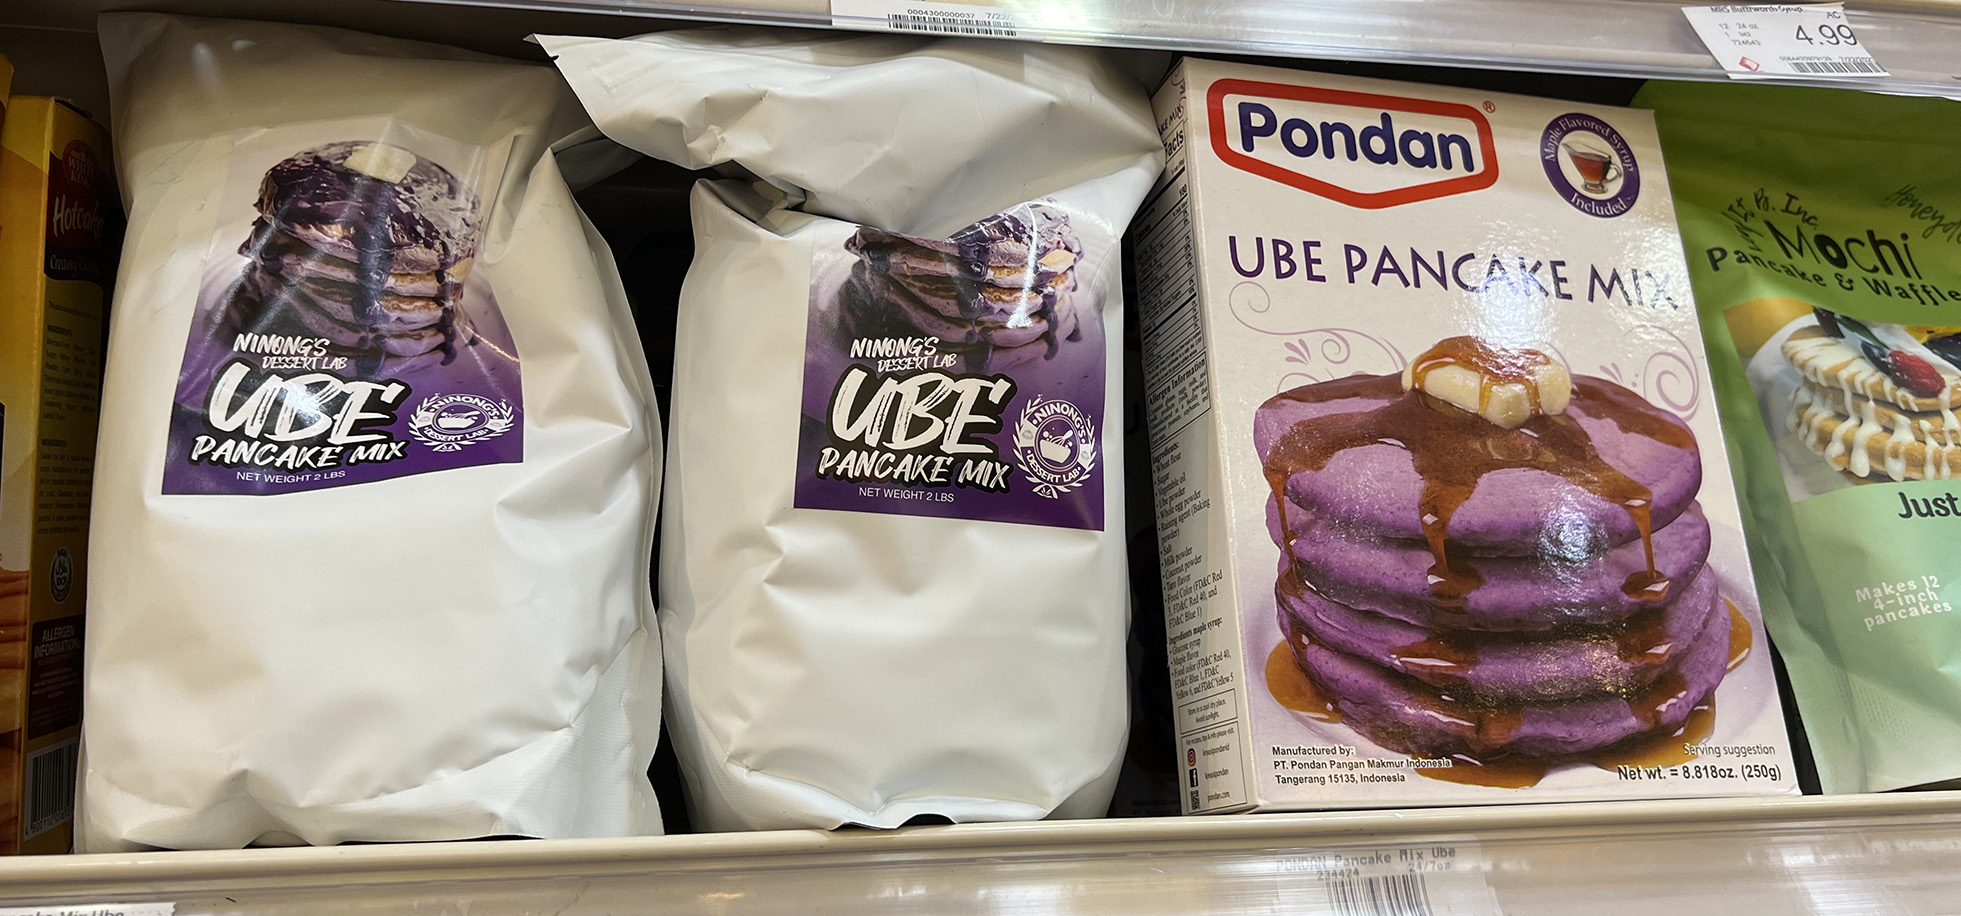 Ube pancake mix - Seafood City Supermarket in Irvine, California - Photo by Julie Nguyen